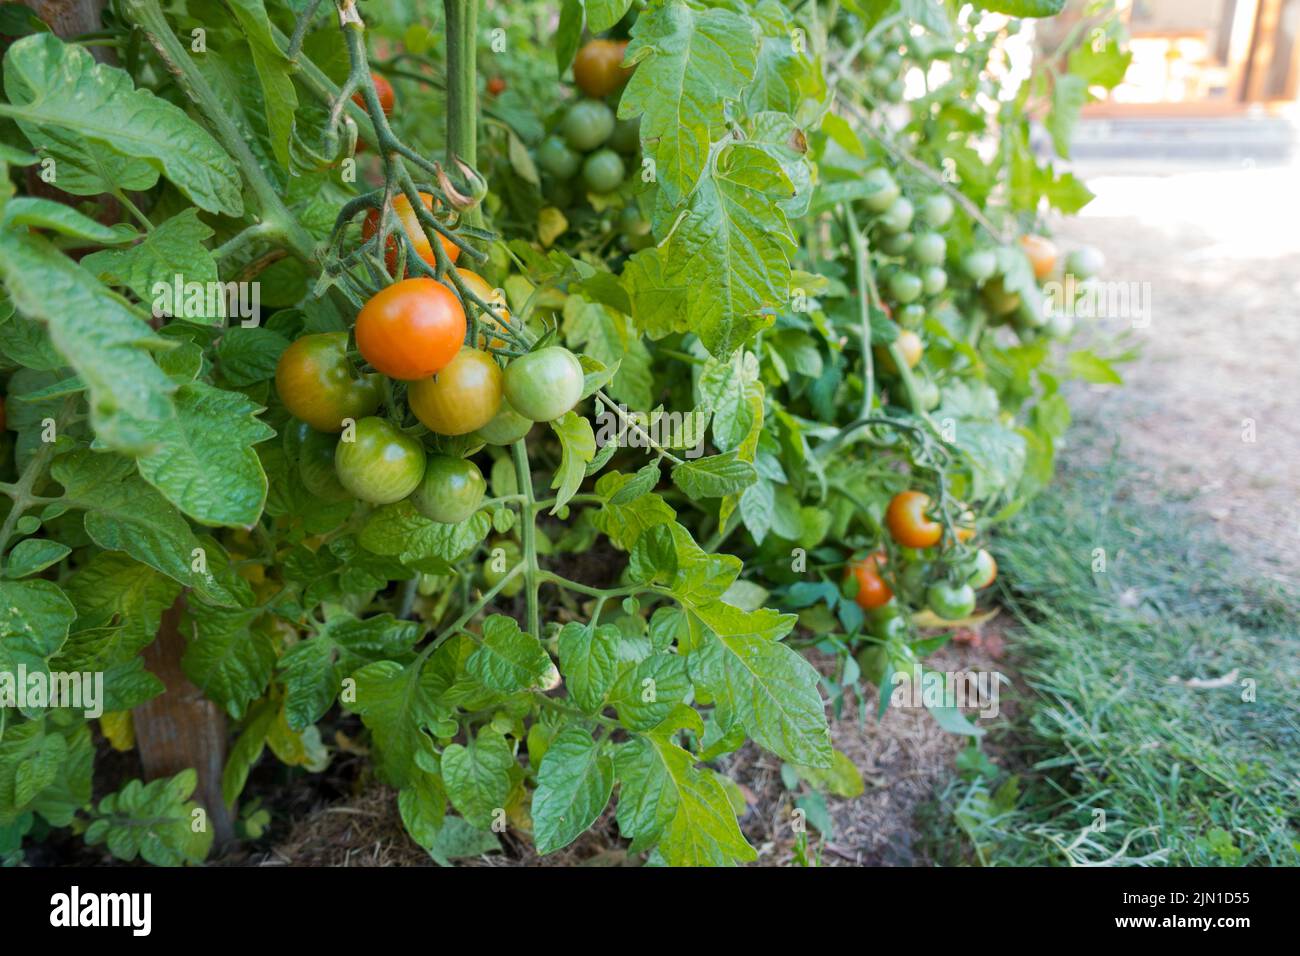 Row of tomato plant Solanum lycopersicum in a house garden Stock Photo